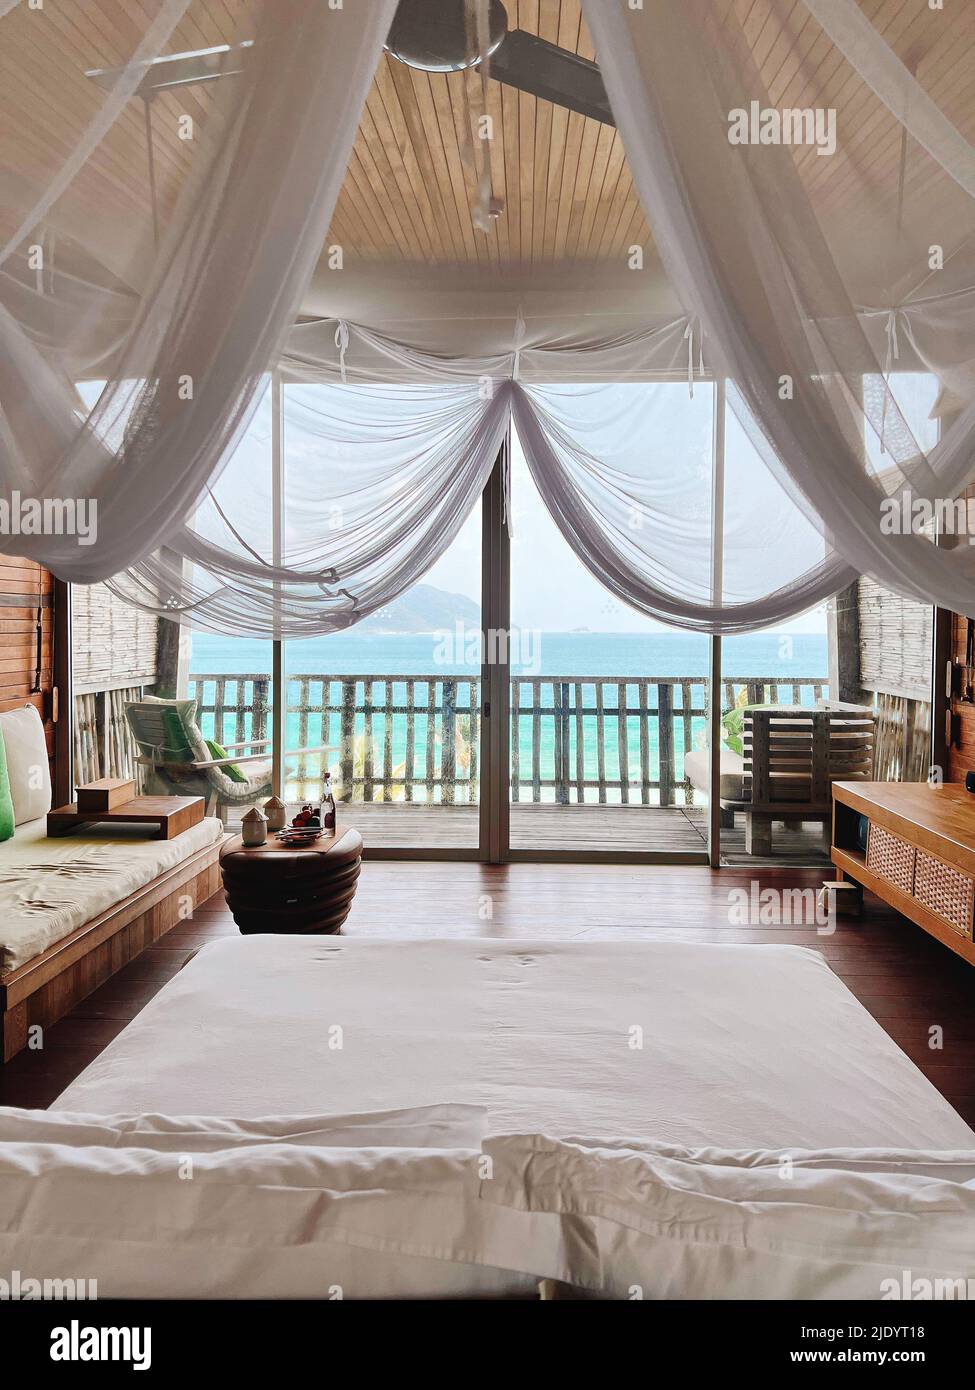 Interior design decor furnishing of luxury show home holiday villa bedroom Stock Photo